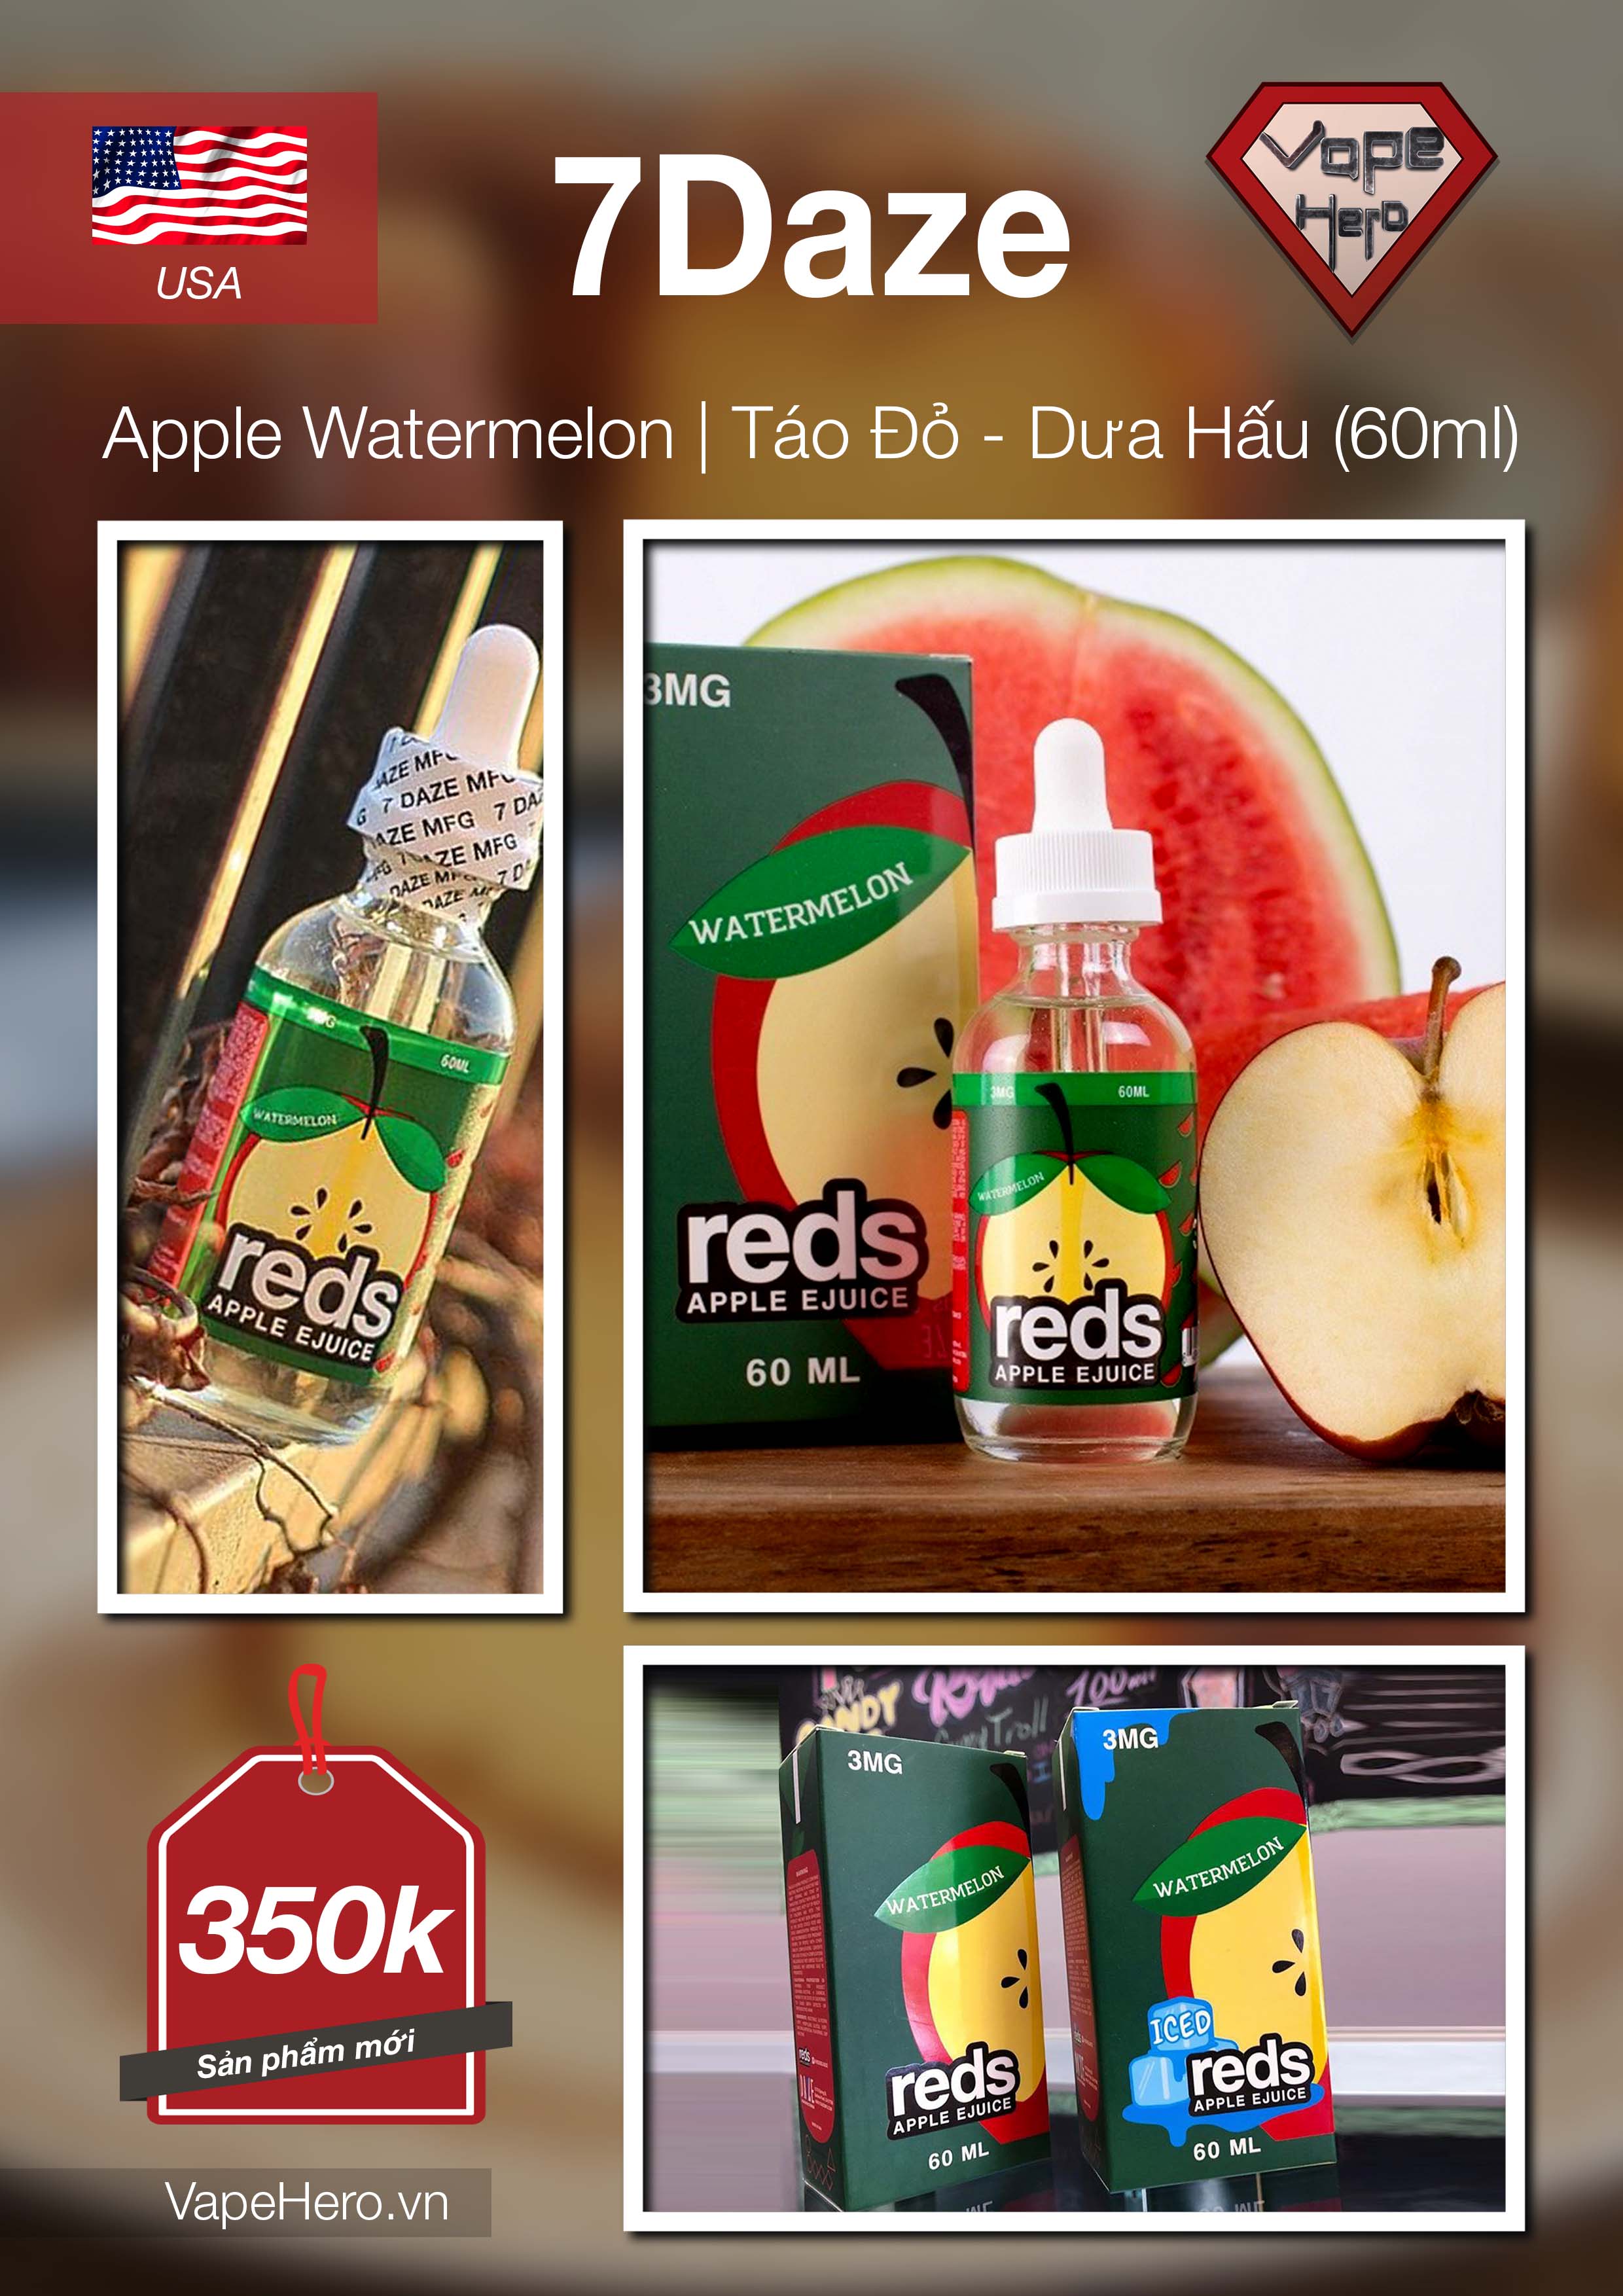 7daze_reds_apple_watermelon_60ml